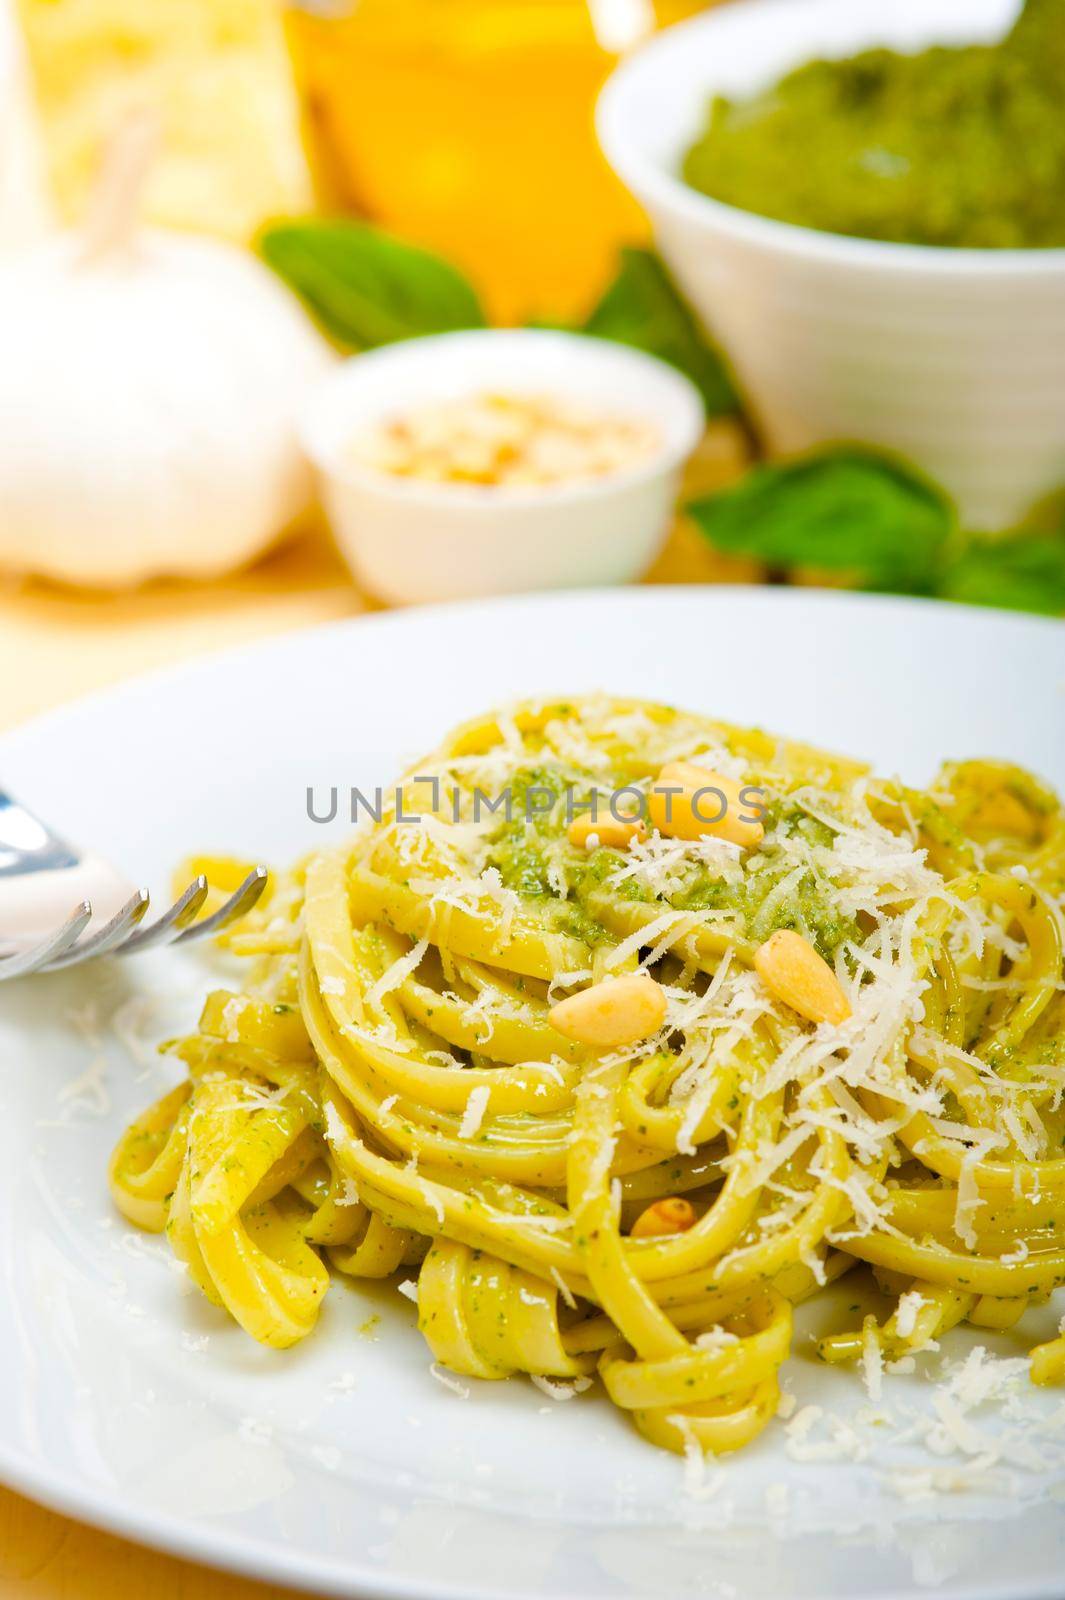 Italian traditional basil pesto pasta ingredients by keko64